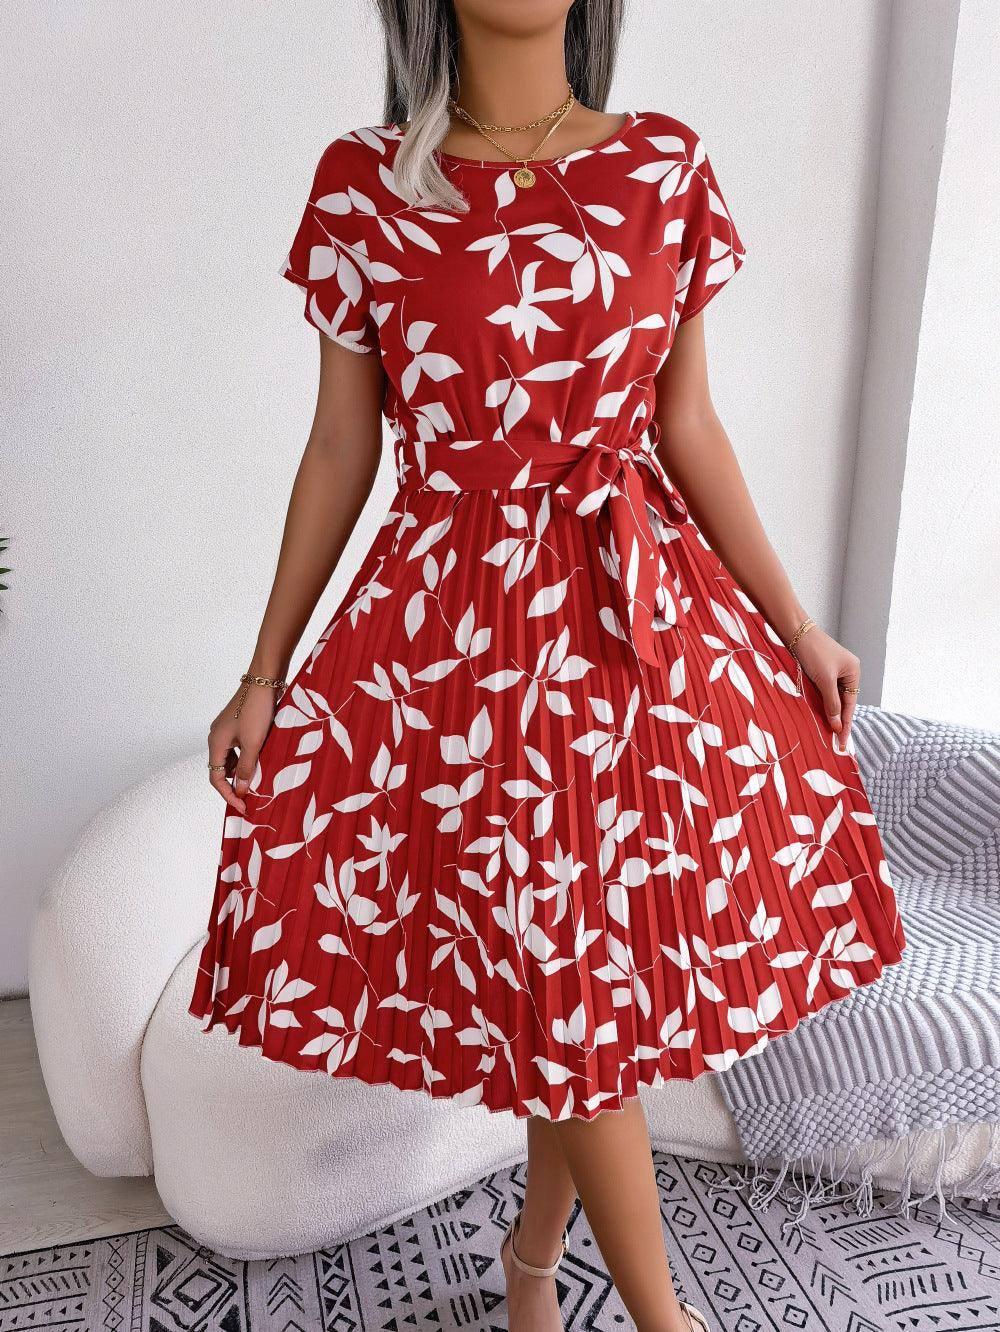 Leaf Print Dress Women Short Sleeve Lace-up Skirt Summer-Wine red-6